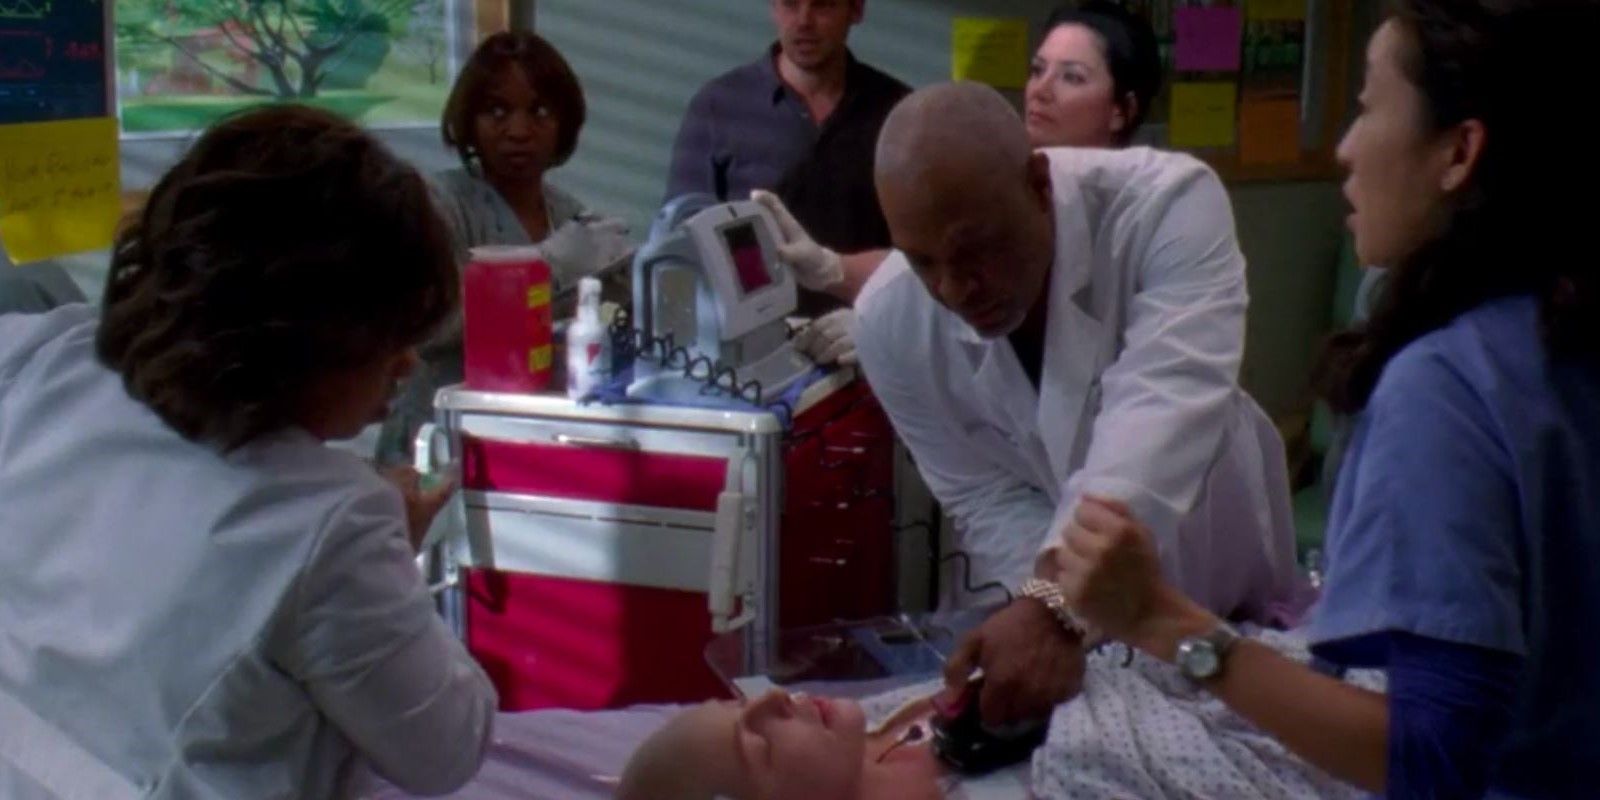 Grey's Anatomy doctors using defibrillators incorrectly.